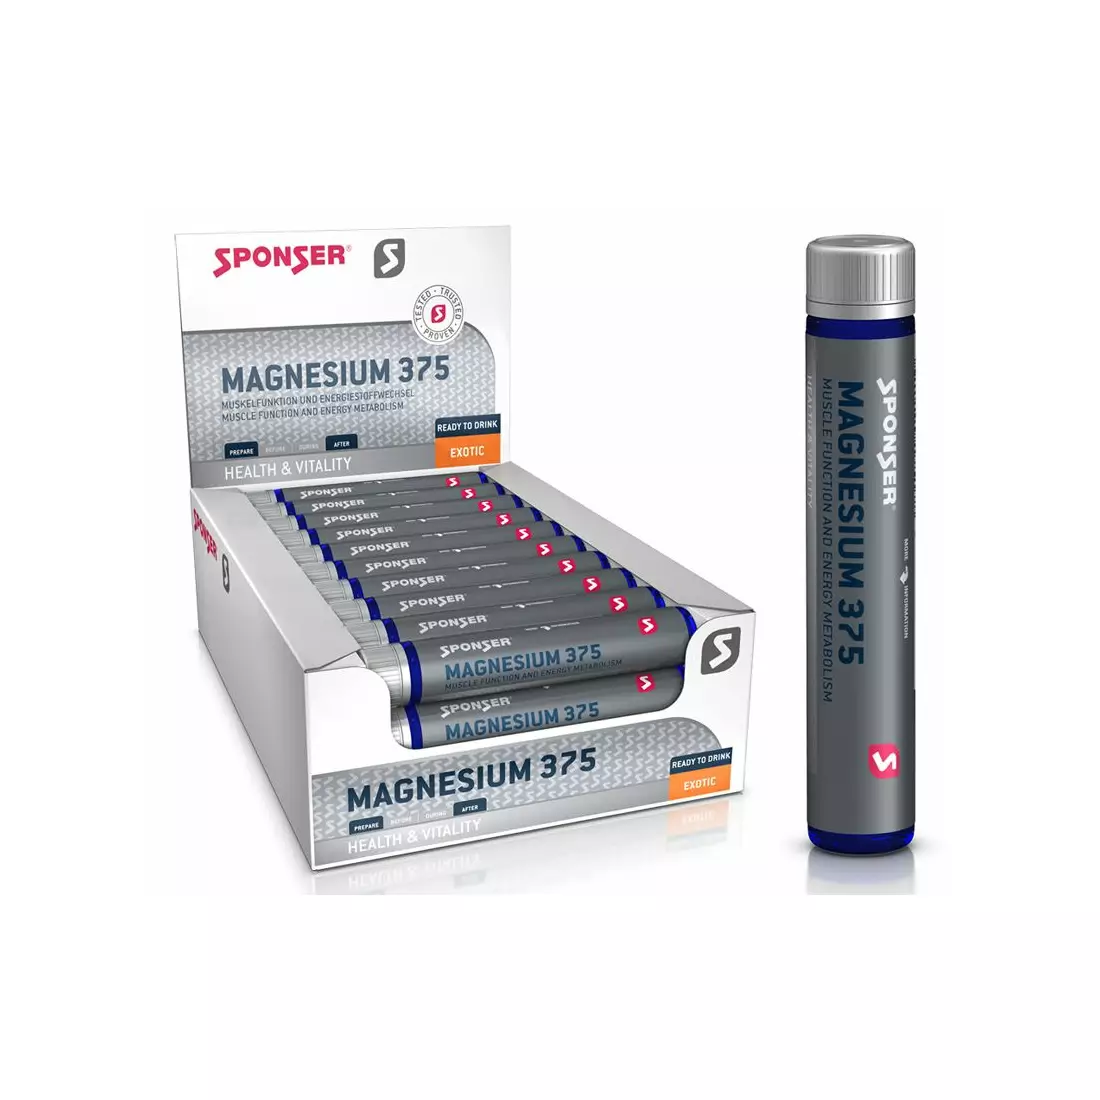 Magnez SPONSER MAGNESIUM 375 w ampułkach (pudełko 30 ampułek x 25g) 